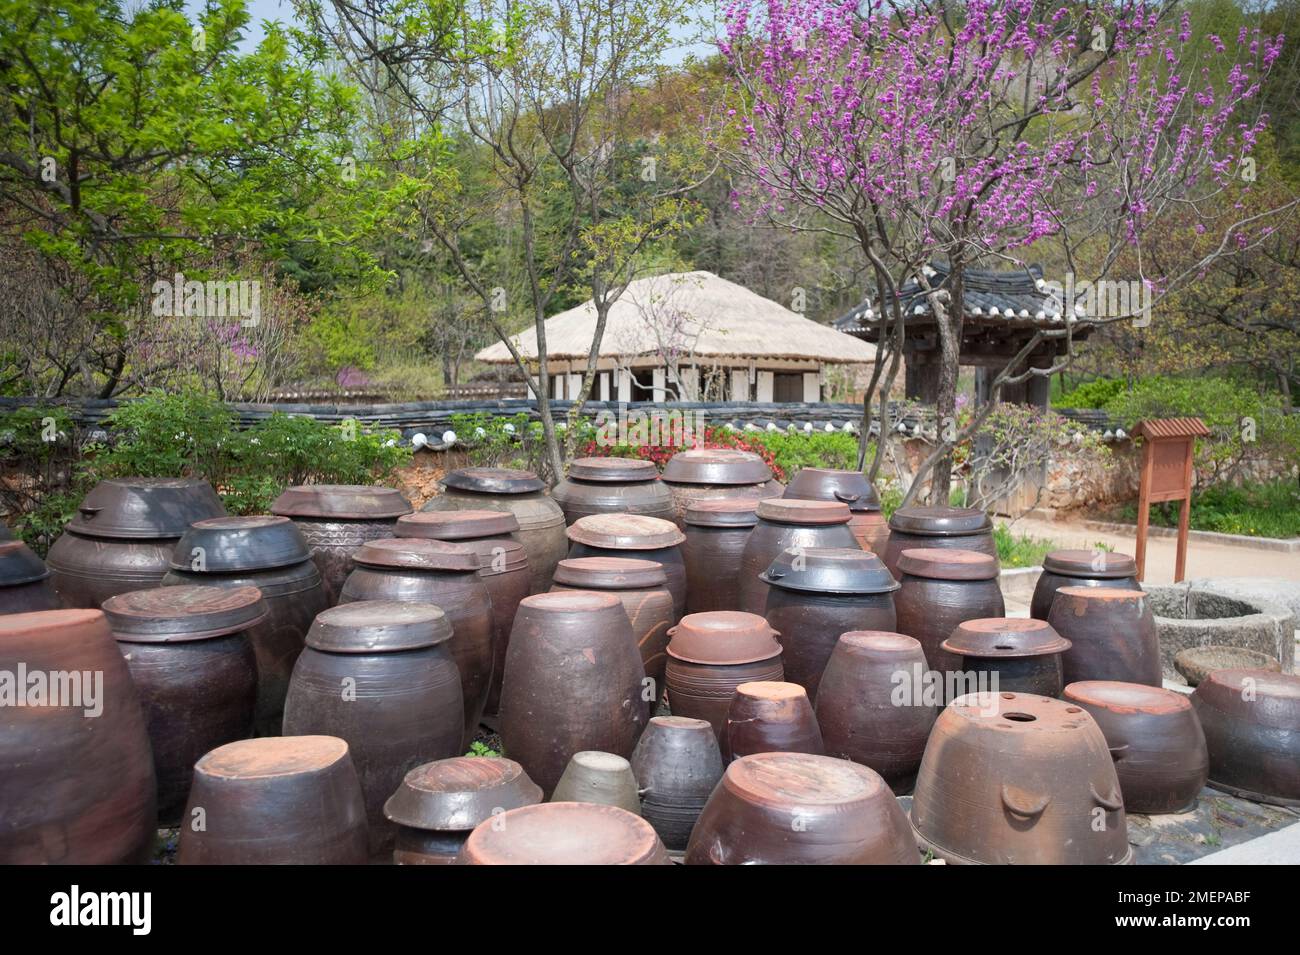 Korea Cooking Pots 